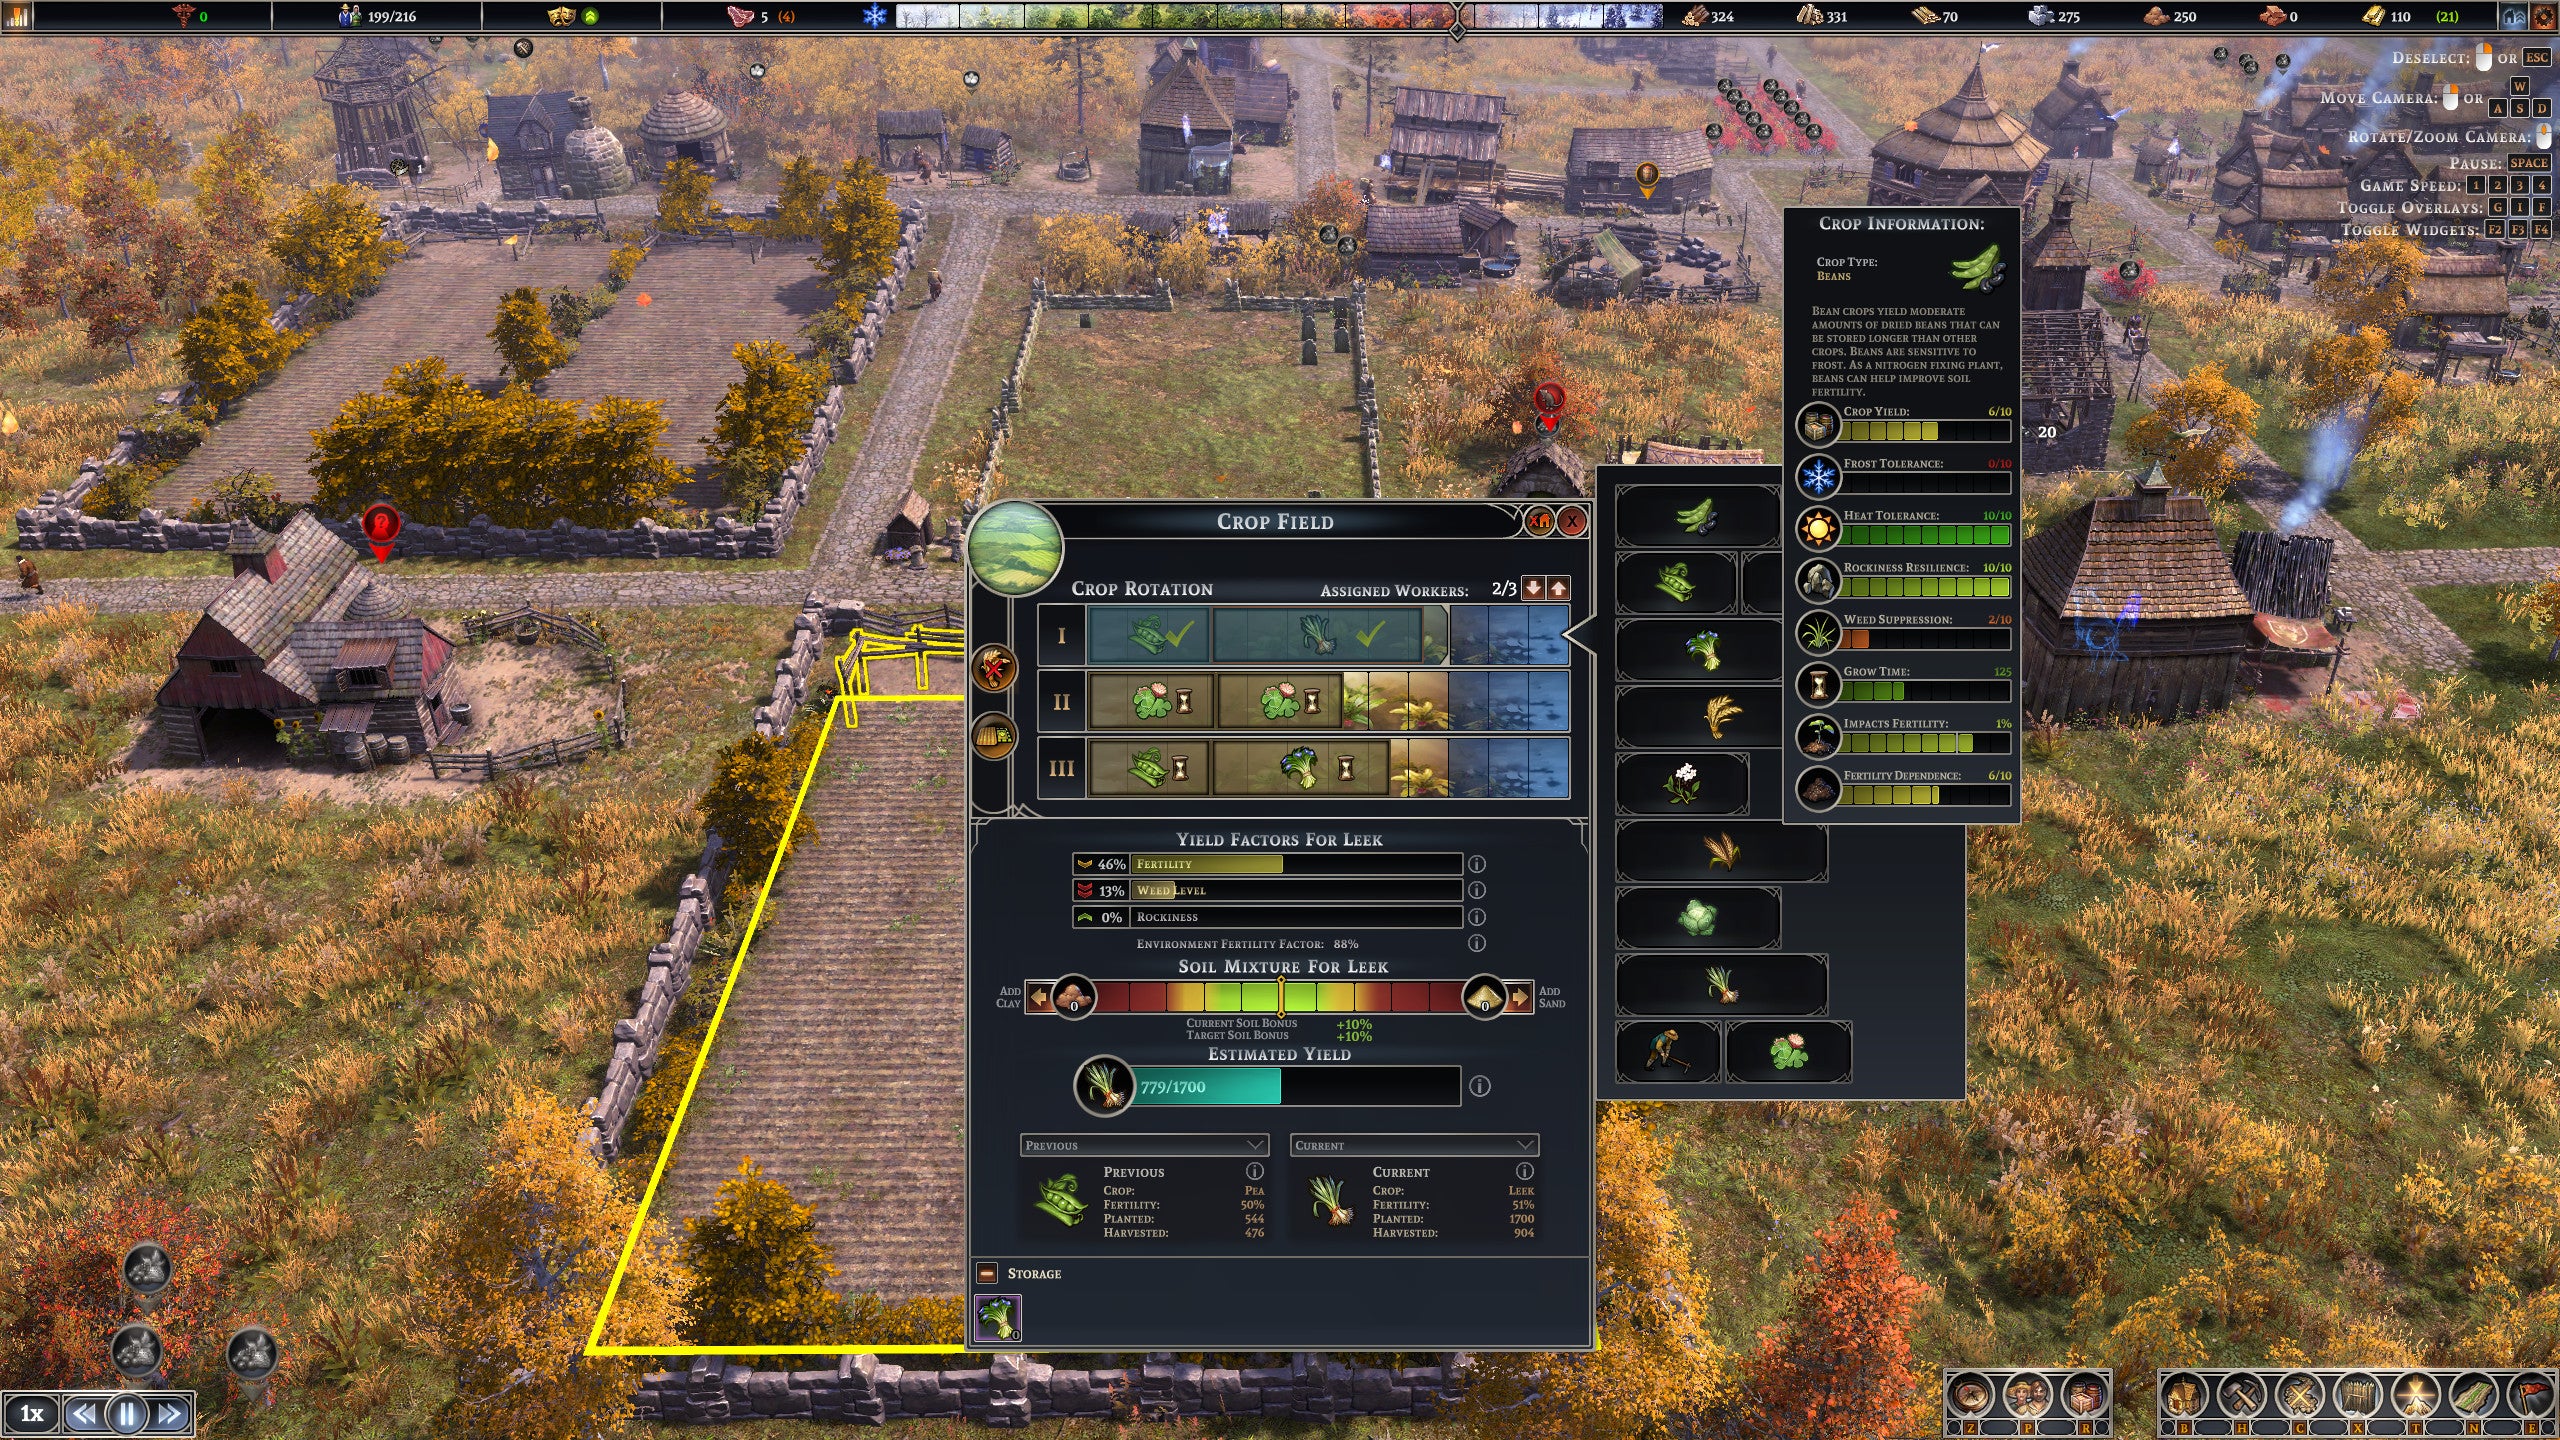 Planning crop rotation in a Farthest Frontier screenshot.